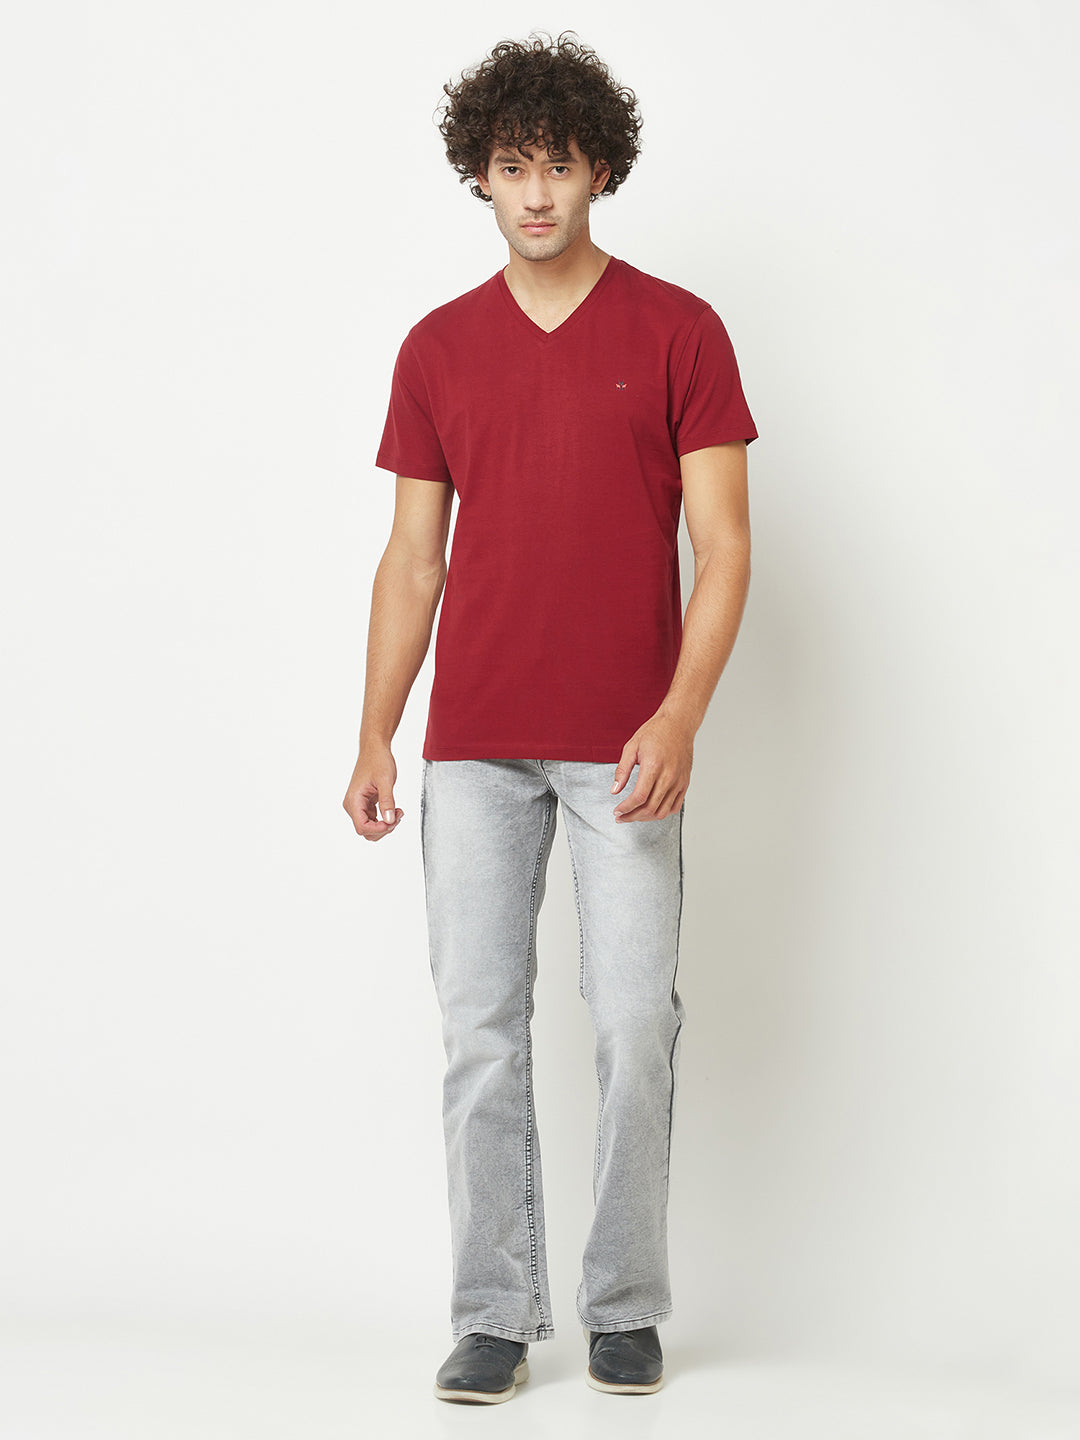  Plain Maroon V-Neck T-Shirt